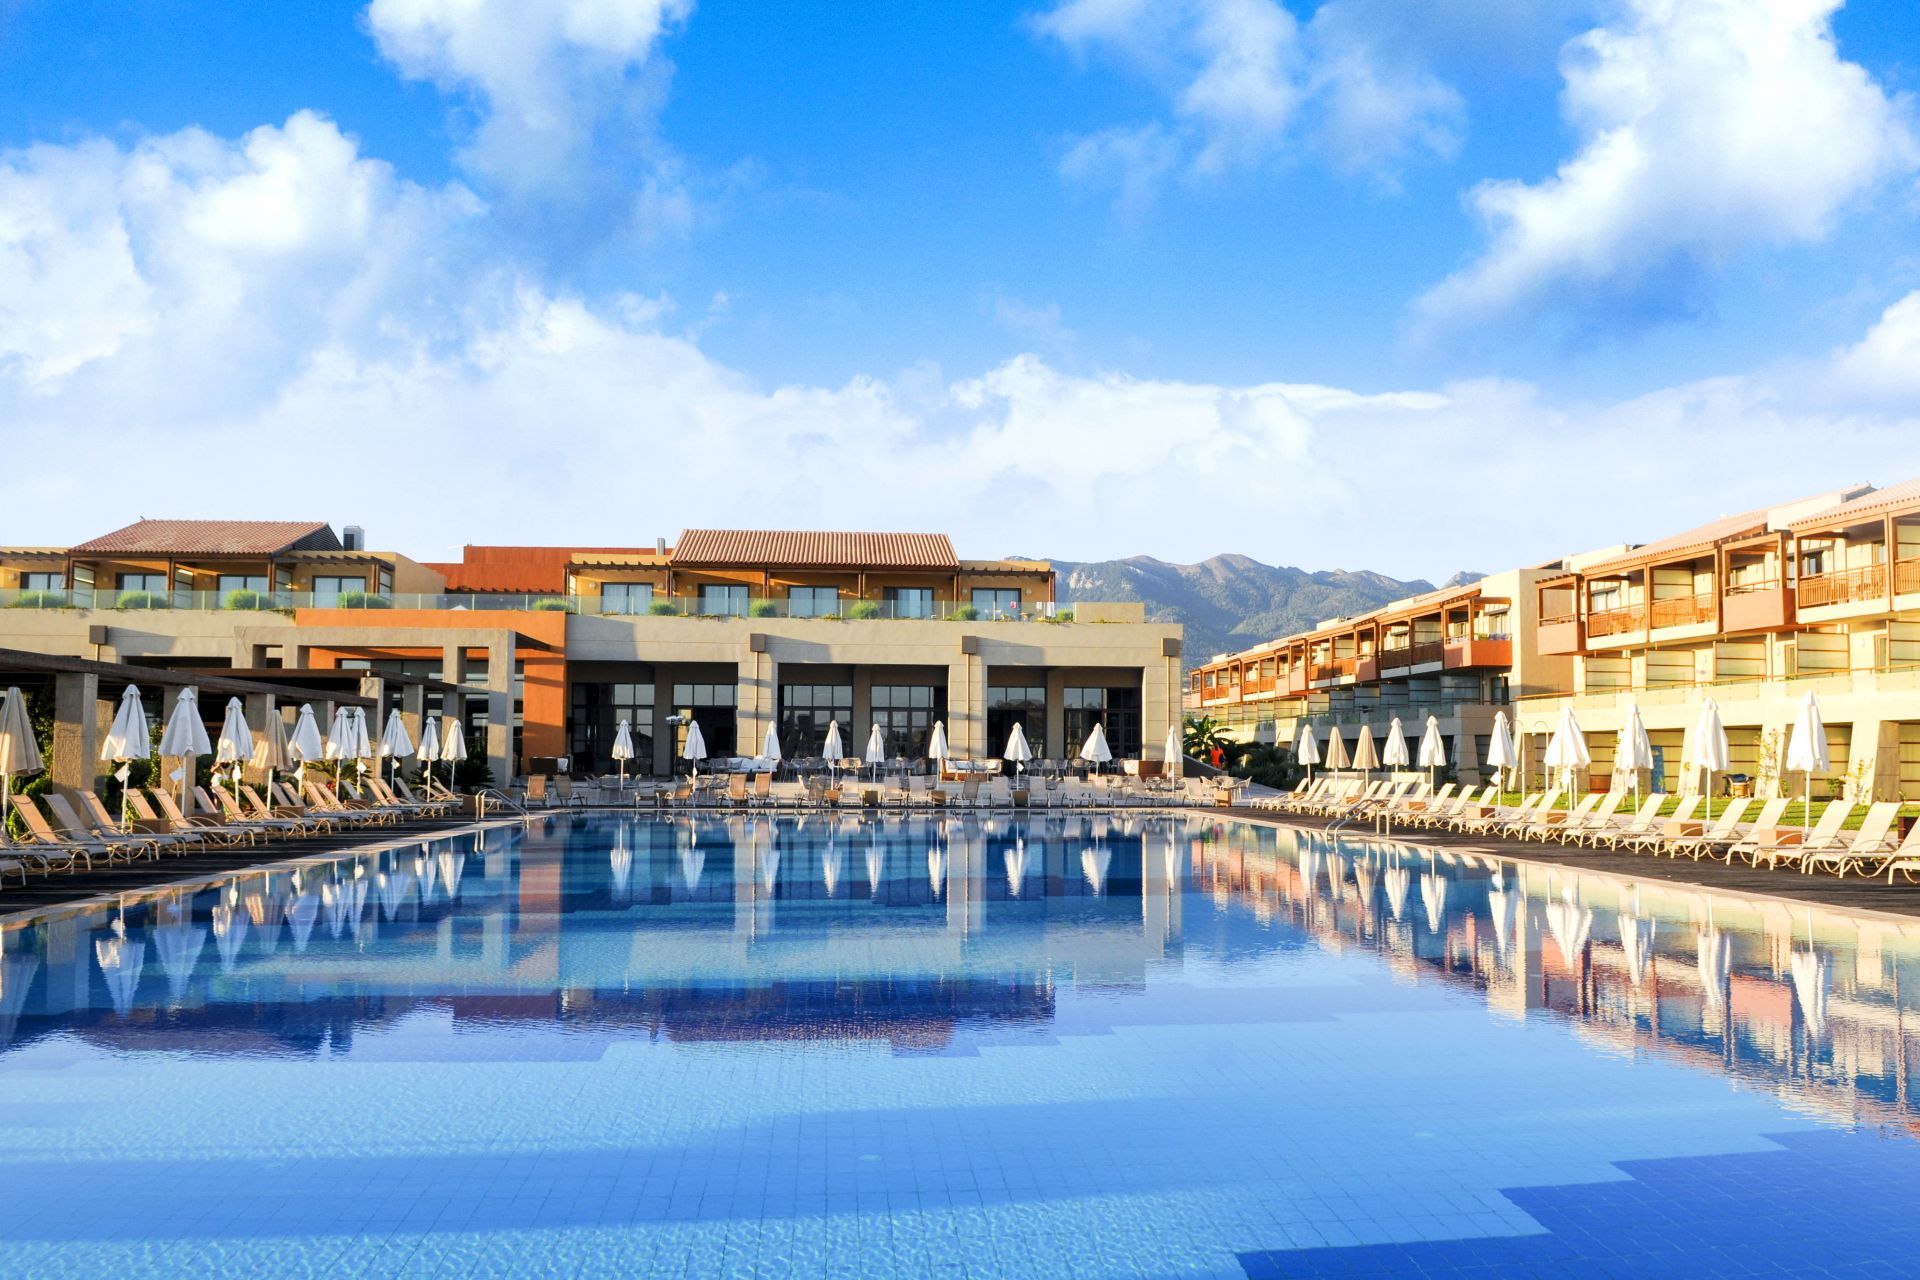 Astir Odysseus Kos Resort and Spa, in the Tingaki area